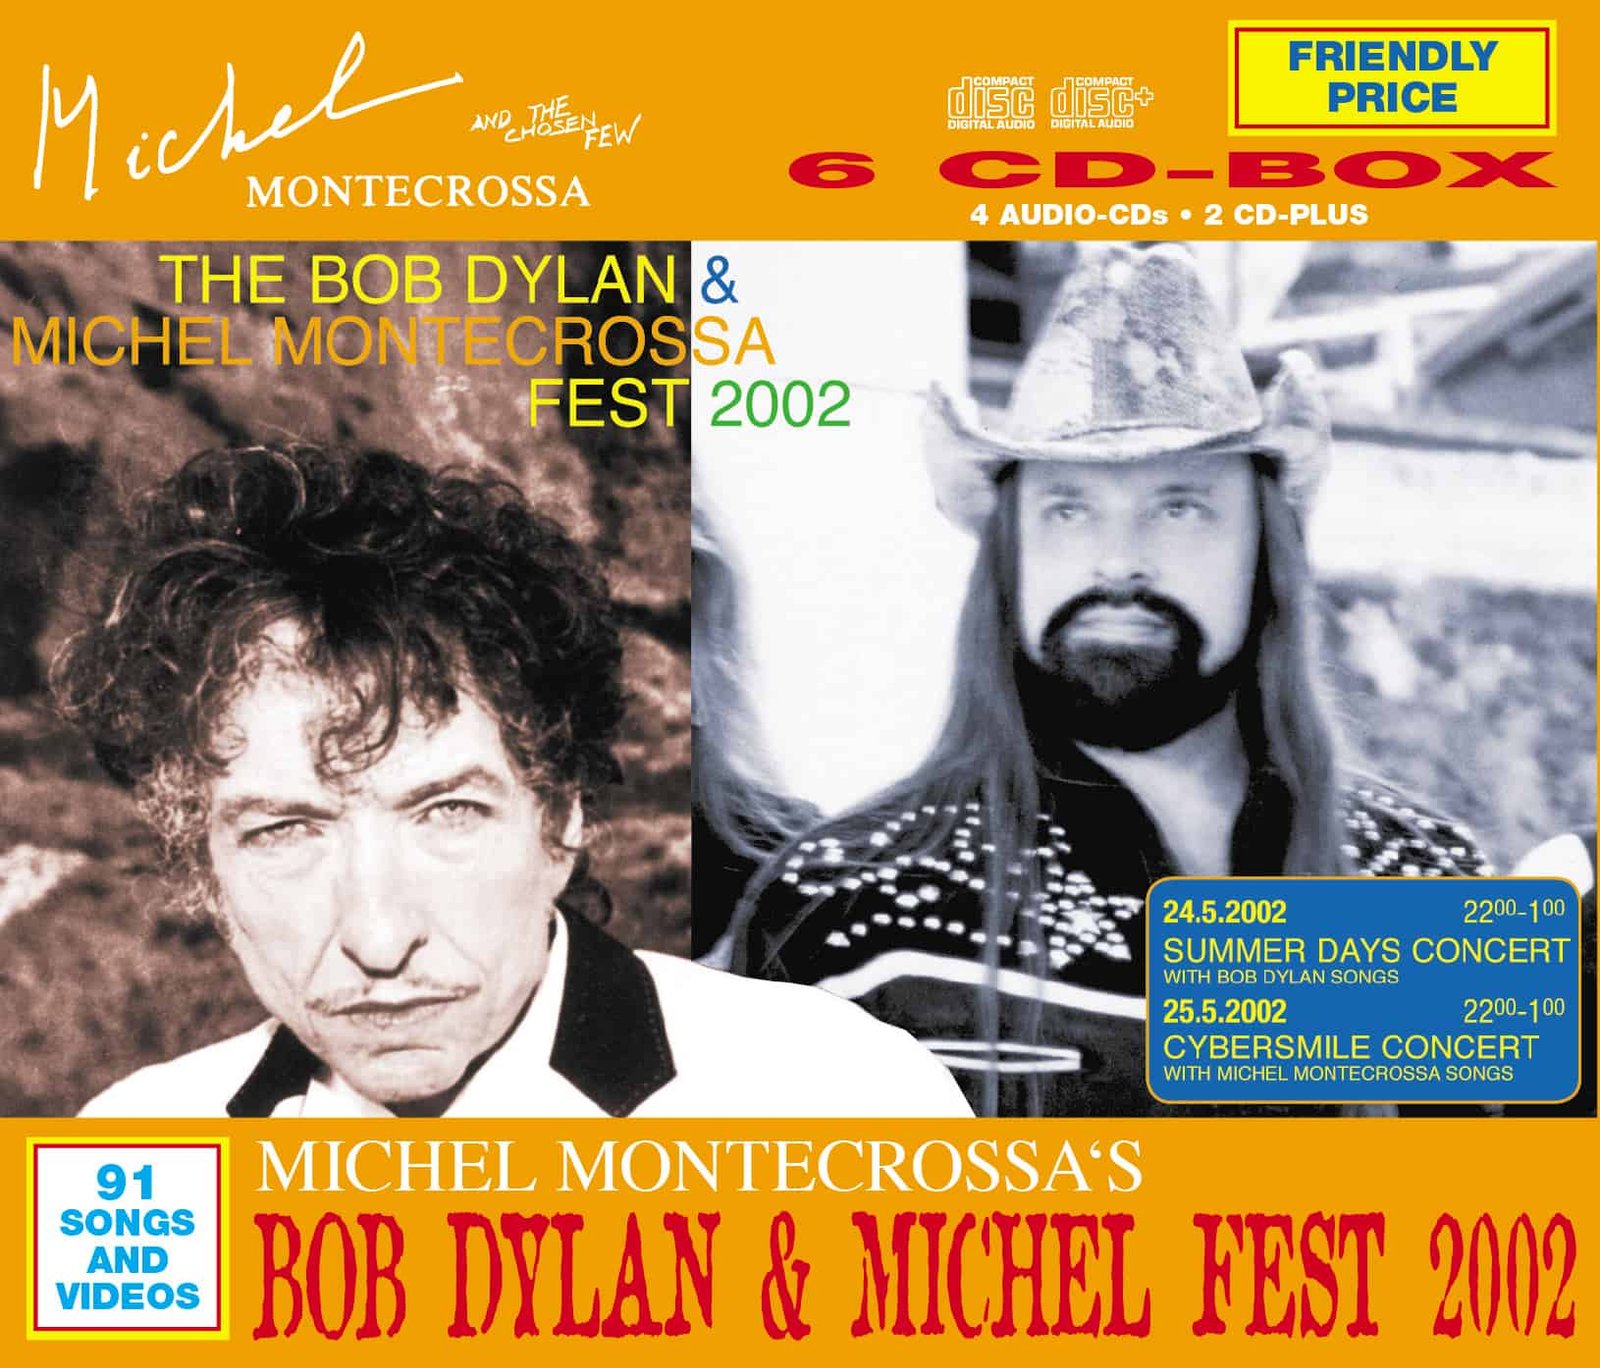 Michel Montecrossa’s Bob Dylan & Michel Fest 2002